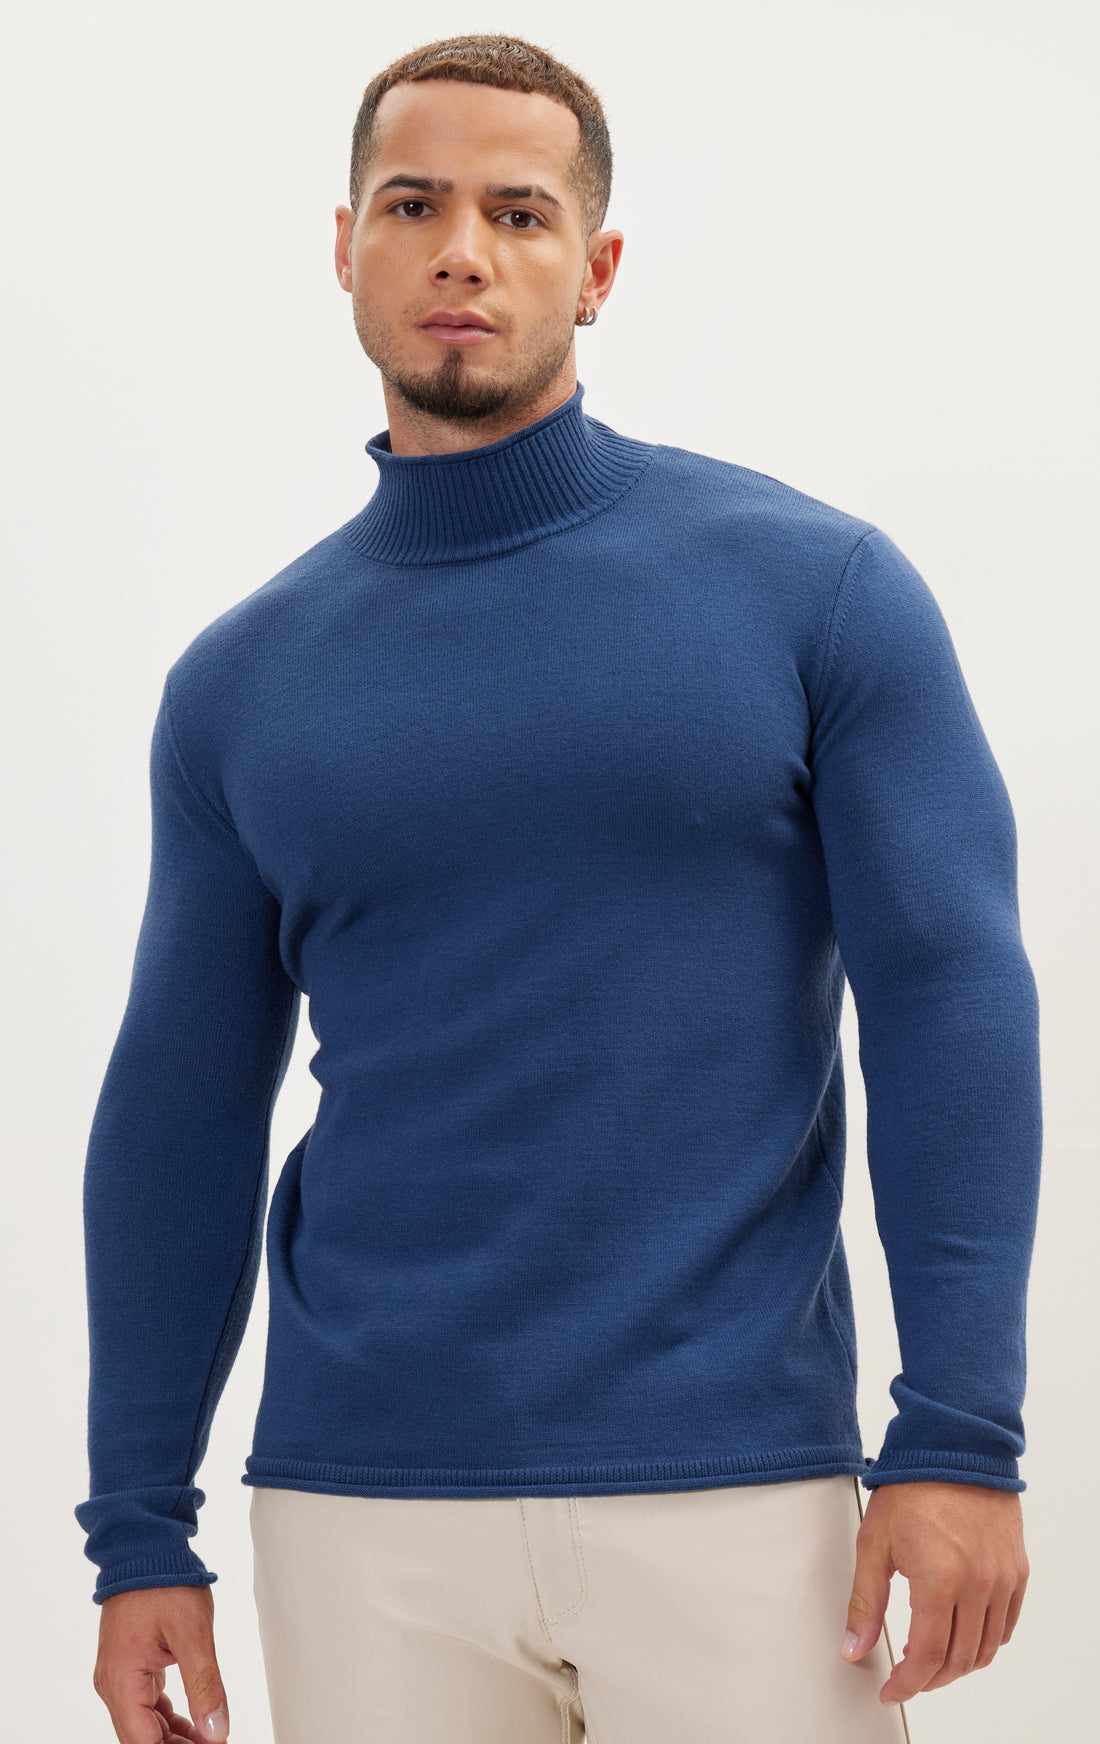 N° 6465 classic mock neck sweater - INDIGO